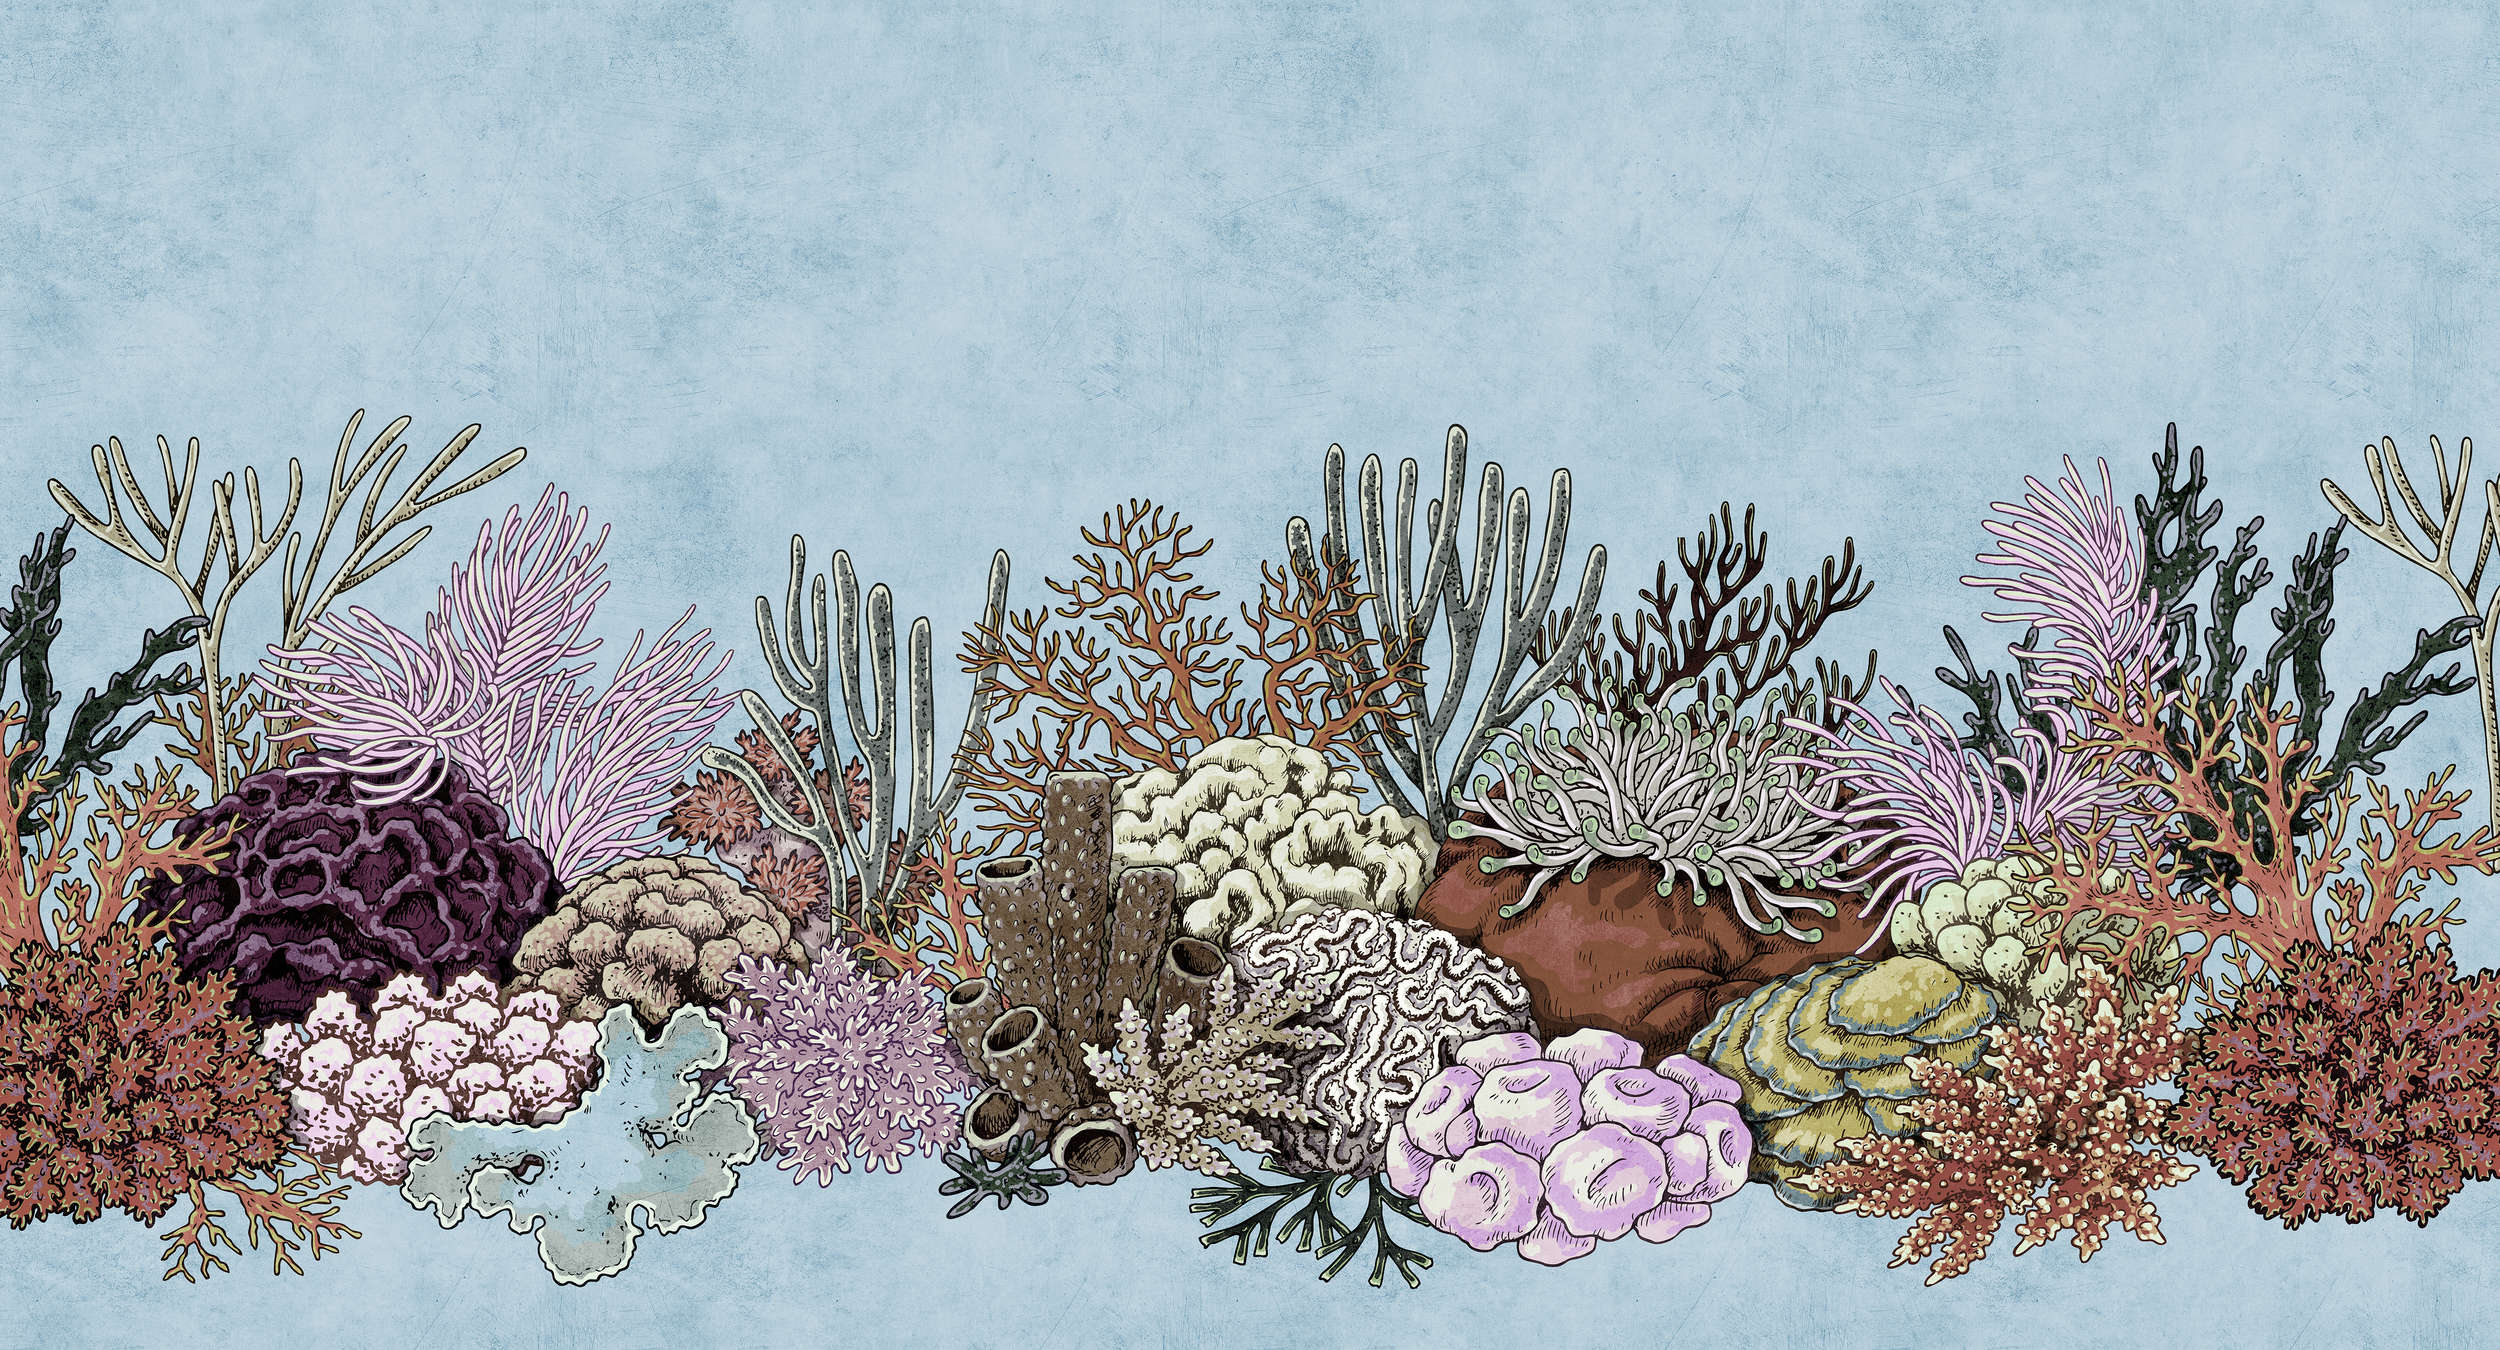             Octopus's Garden 1 - Carta da parati subacquea con coralli in struttura di carta assorbente - Blu, Rosa | Premium Smooth Fleece
        